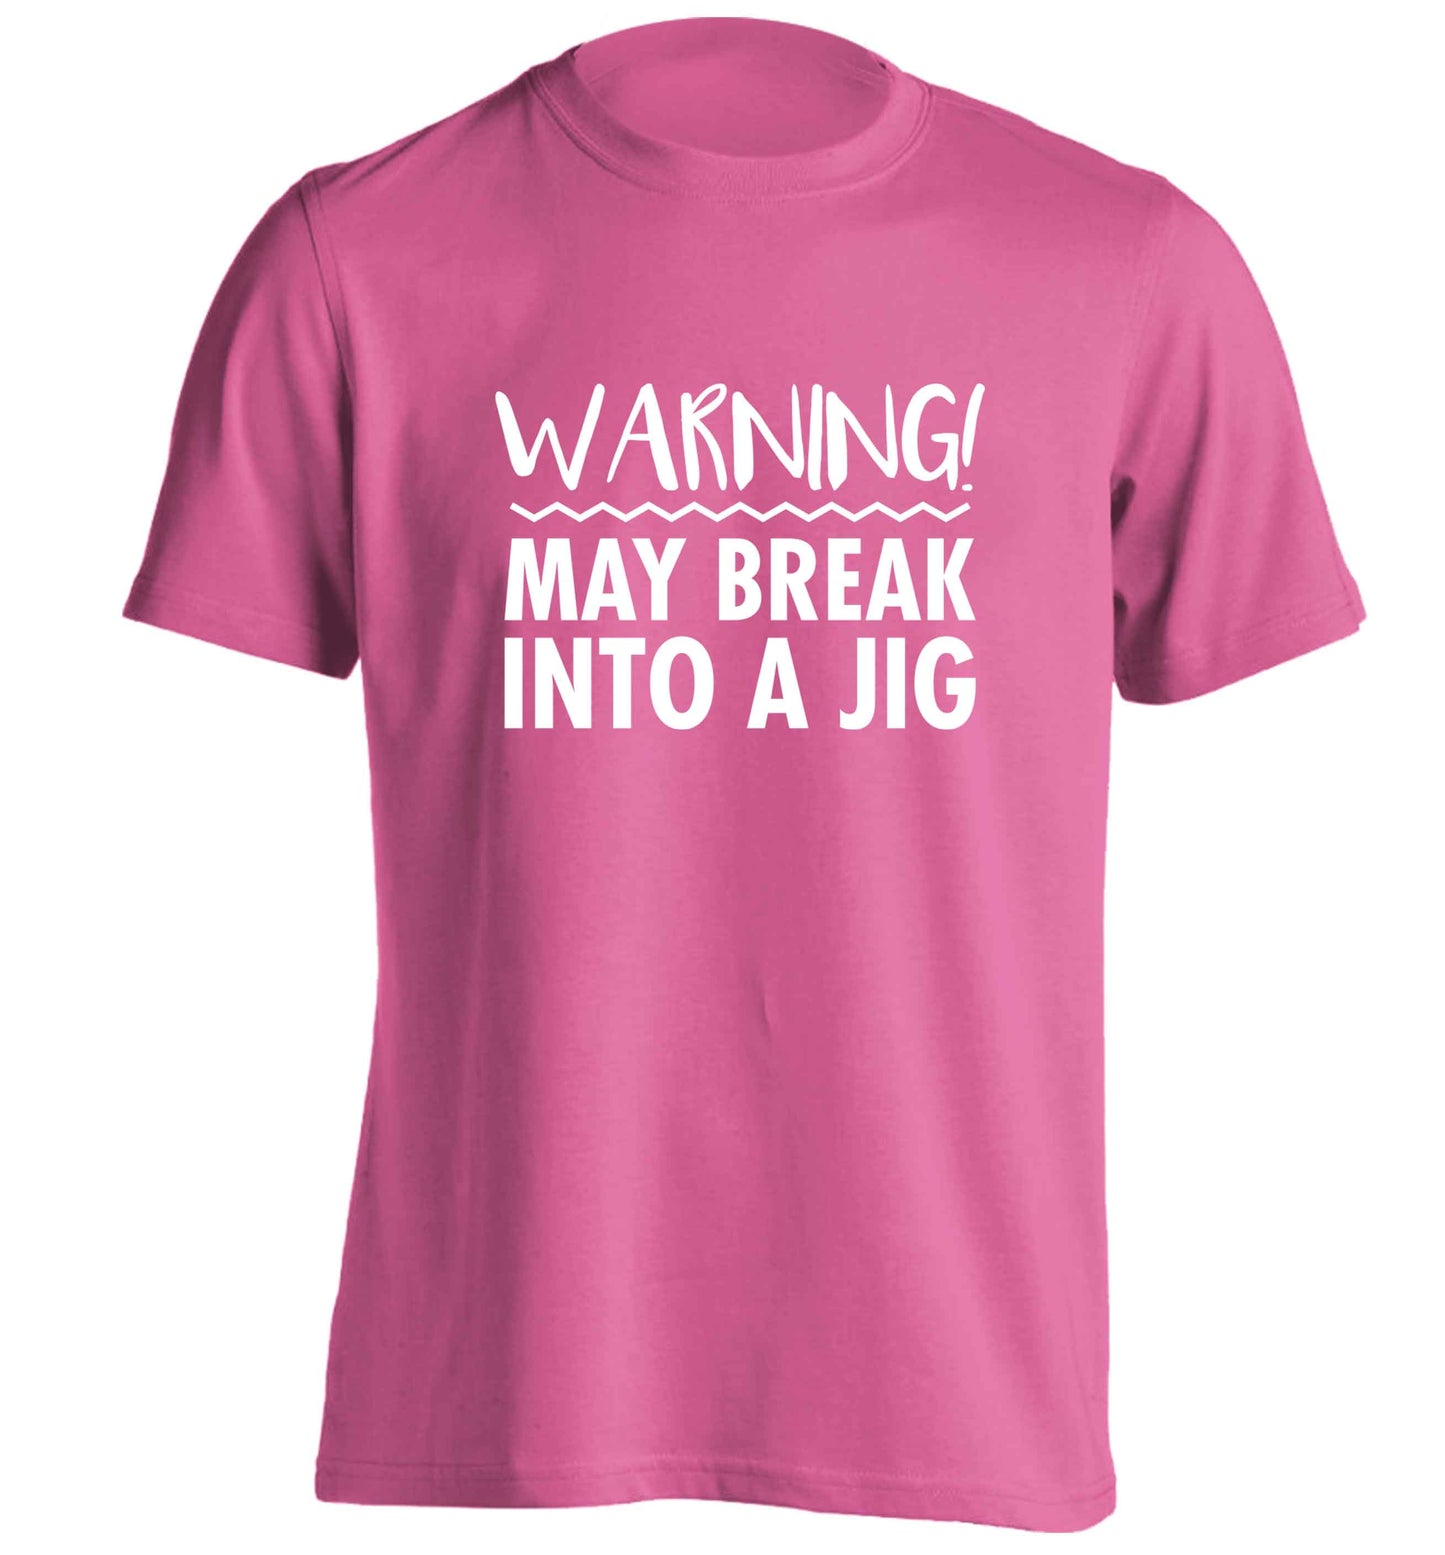 Warning may break into a jig adults unisex pink Tshirt 2XL